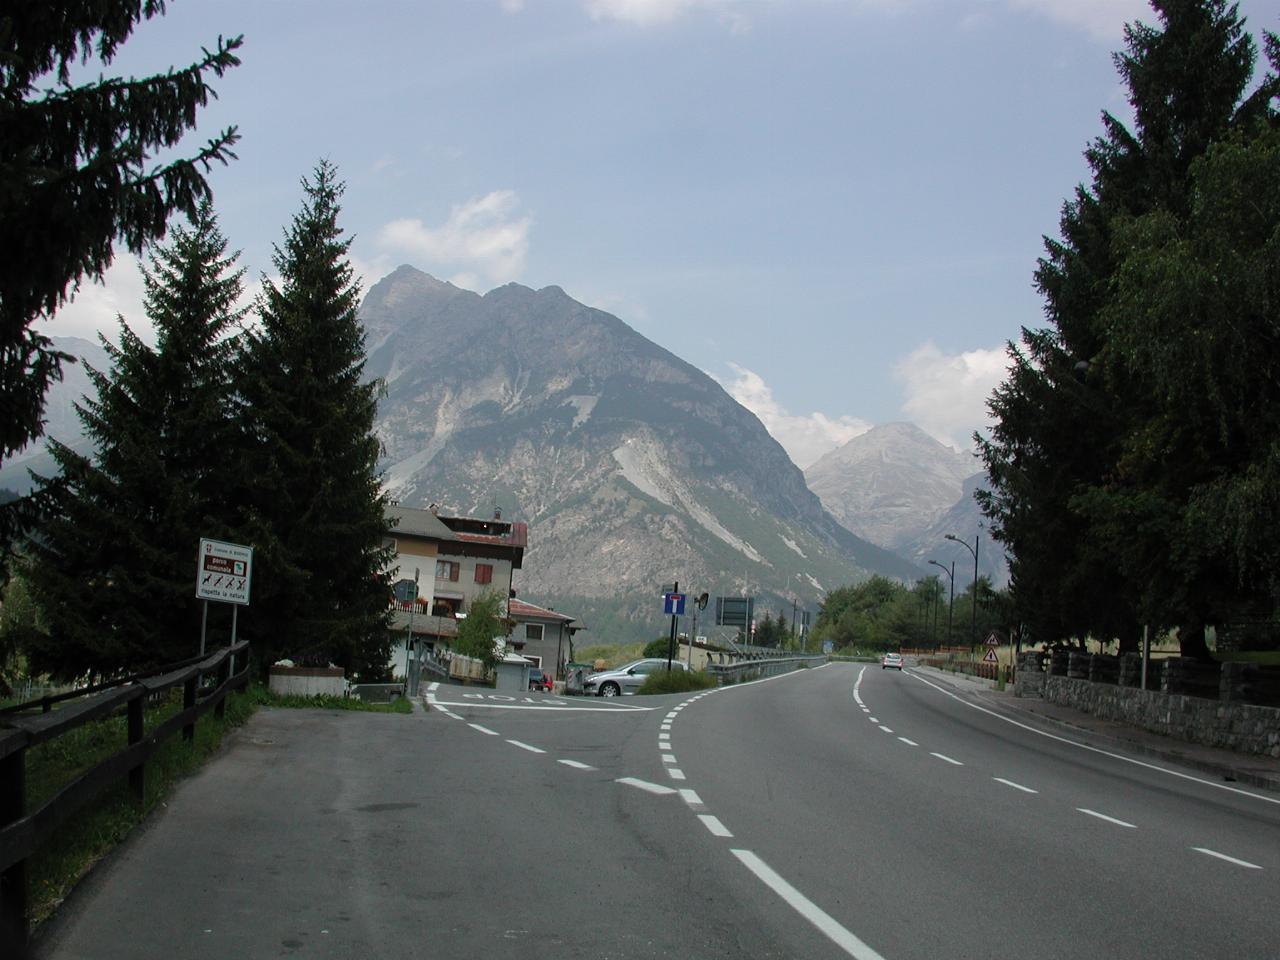 From Bormio, looking back towards Stelvio Pass